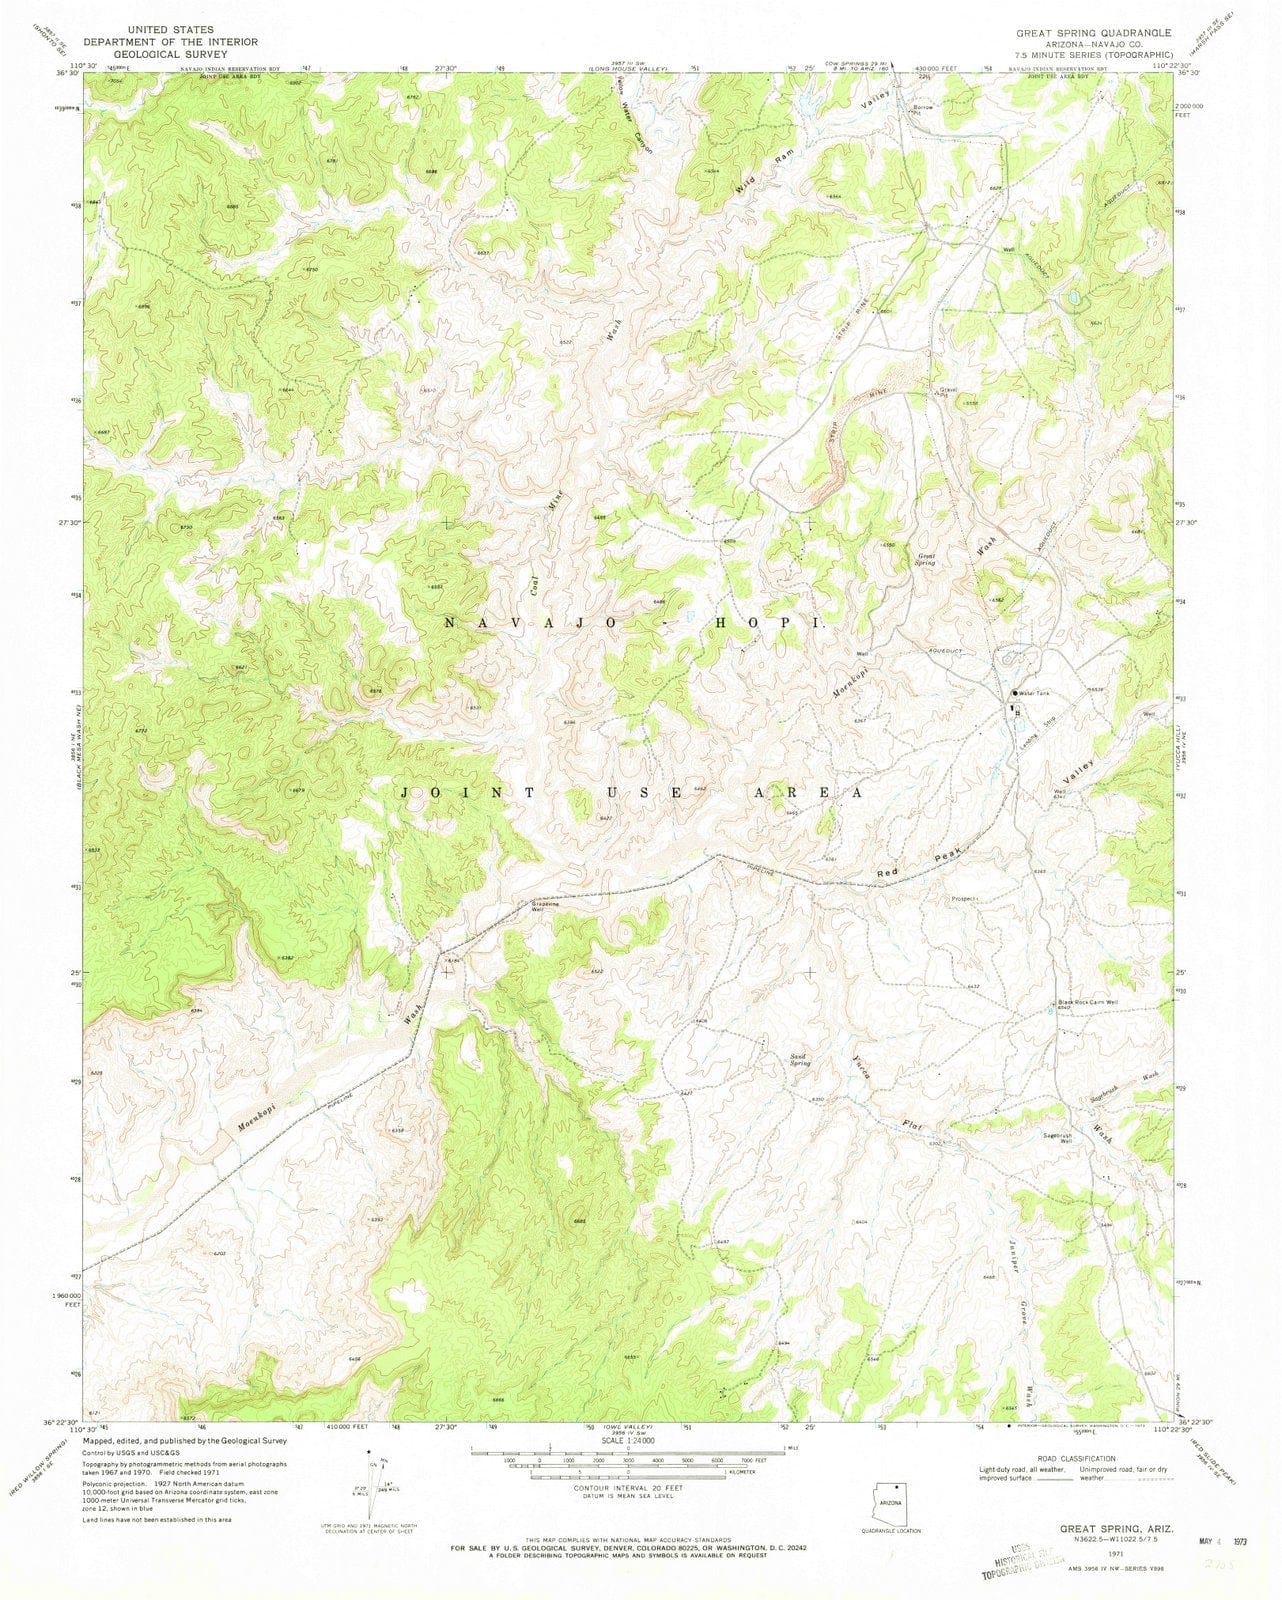 1971 Great Spring, AZ - Arizona - USGS Topographic Map